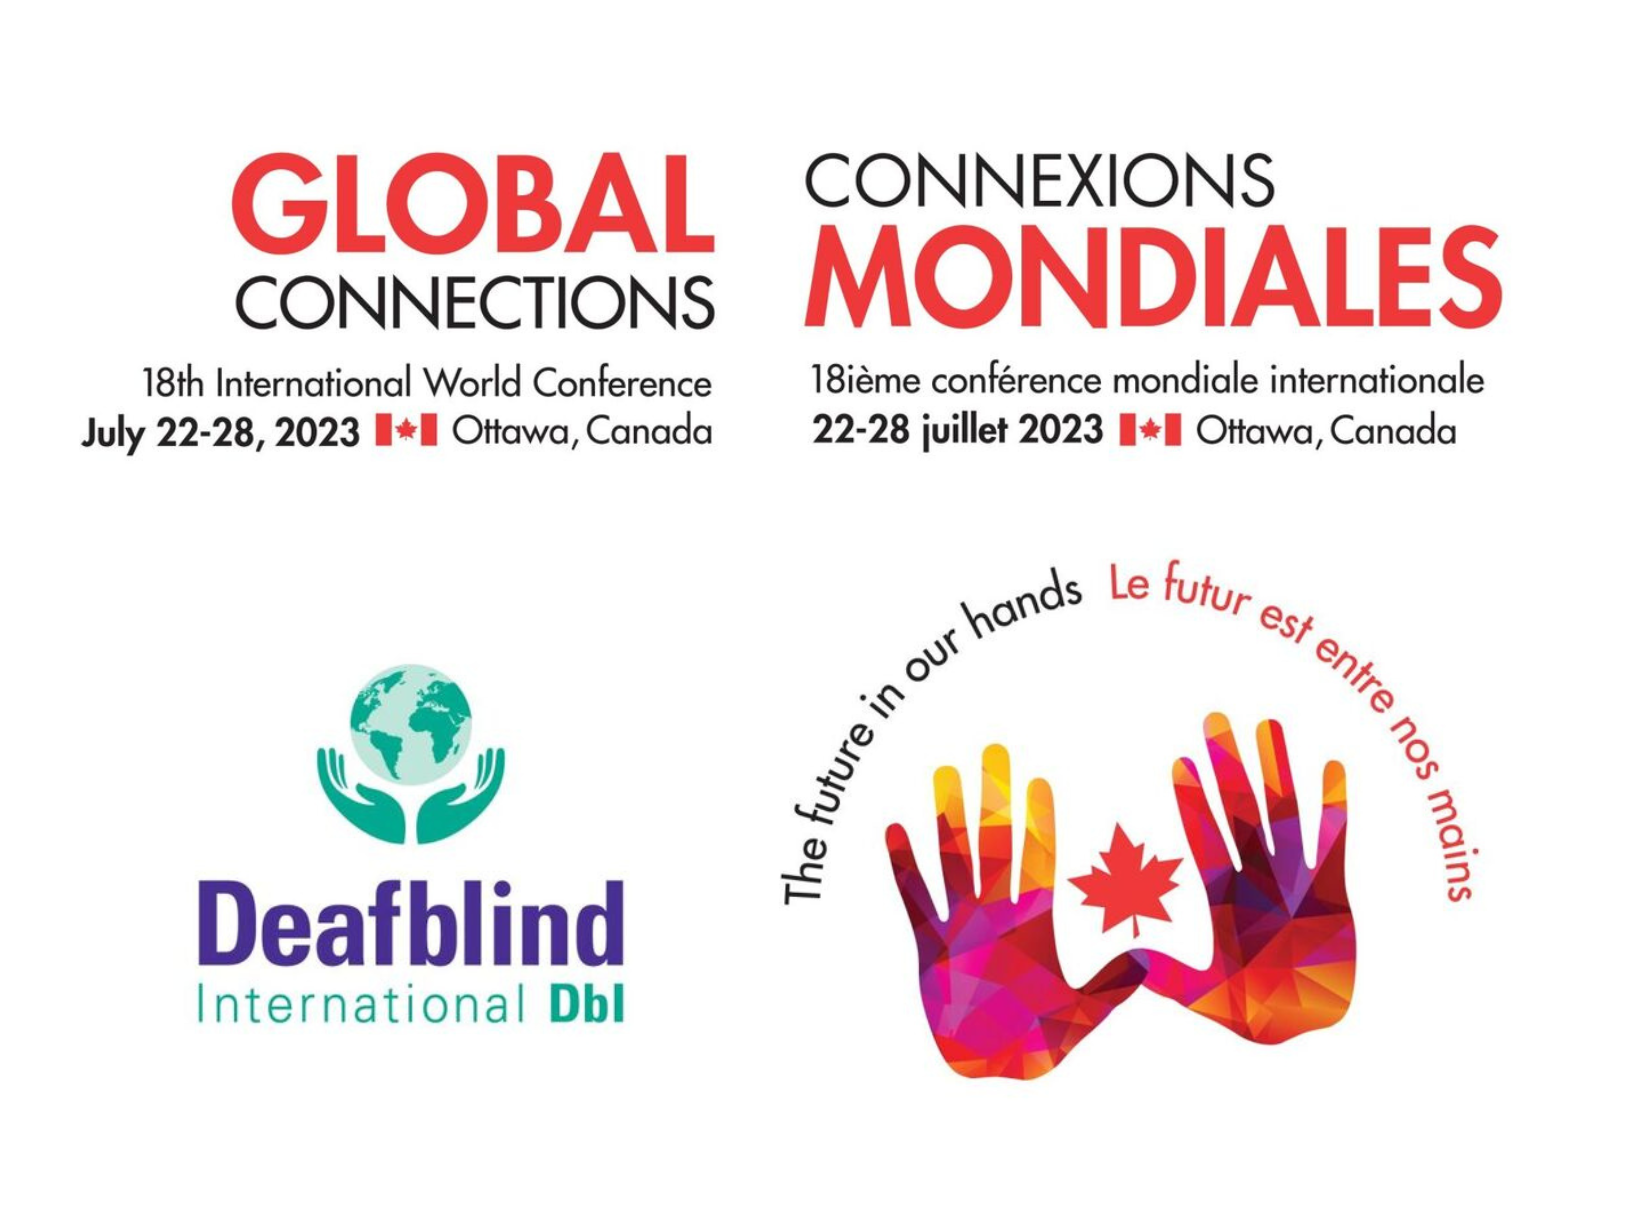 Connexions mondiales. Internationale des sourds-aveugles. 18e conférence mondiale internationale. 22-28 juillet. Ottawa Canada